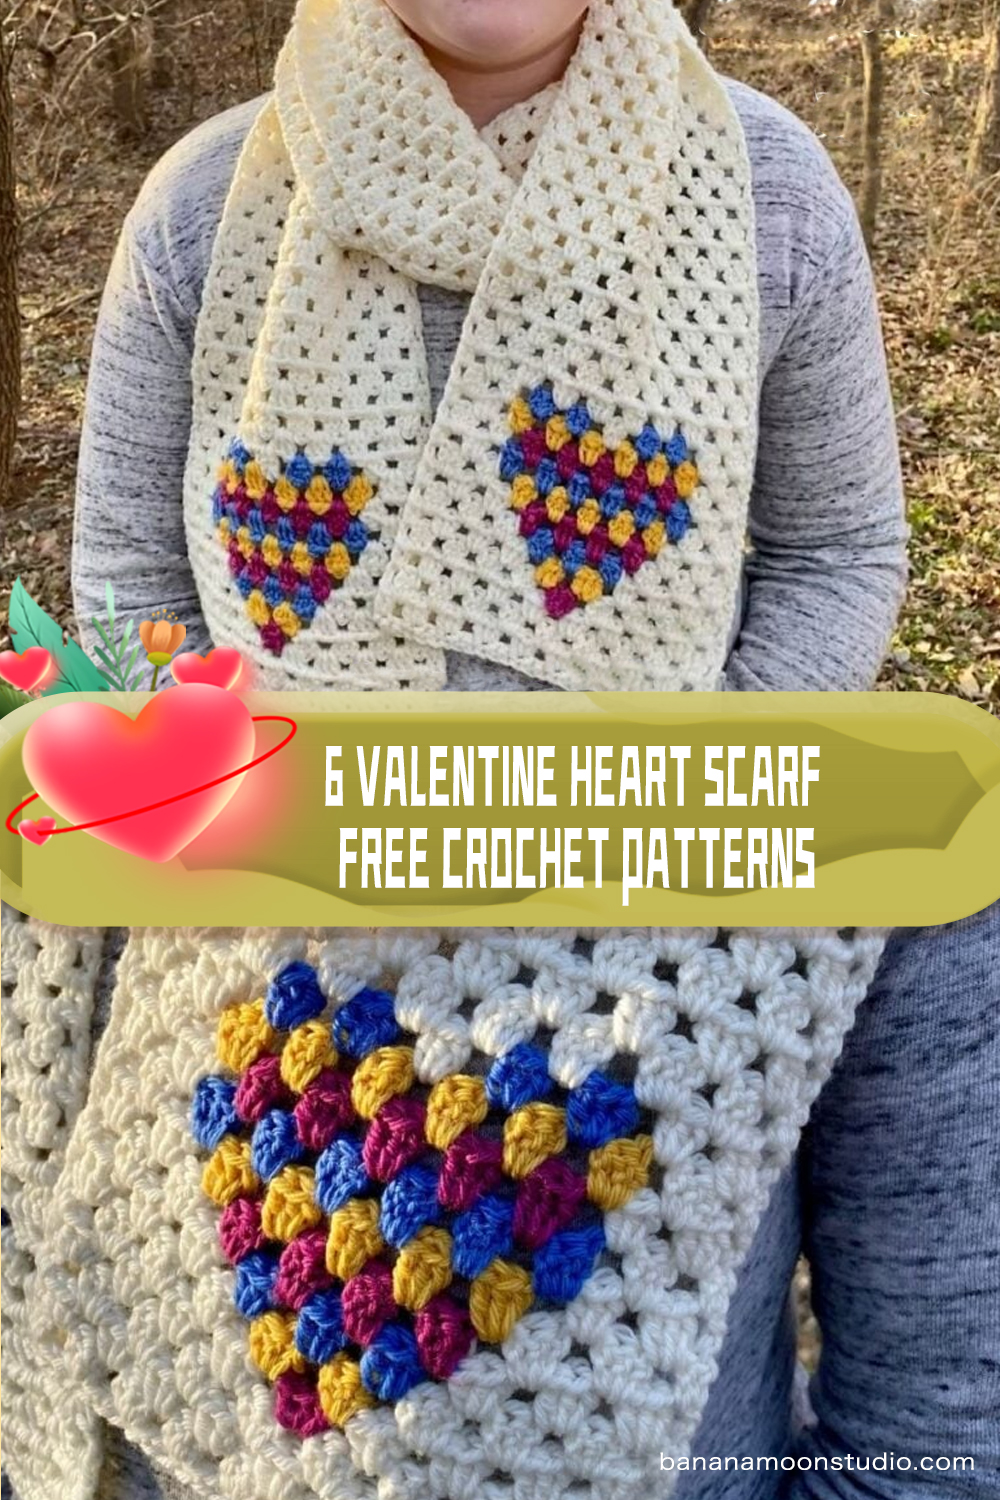 6 Valentine Heart Scarf FREE Crochet Patterns